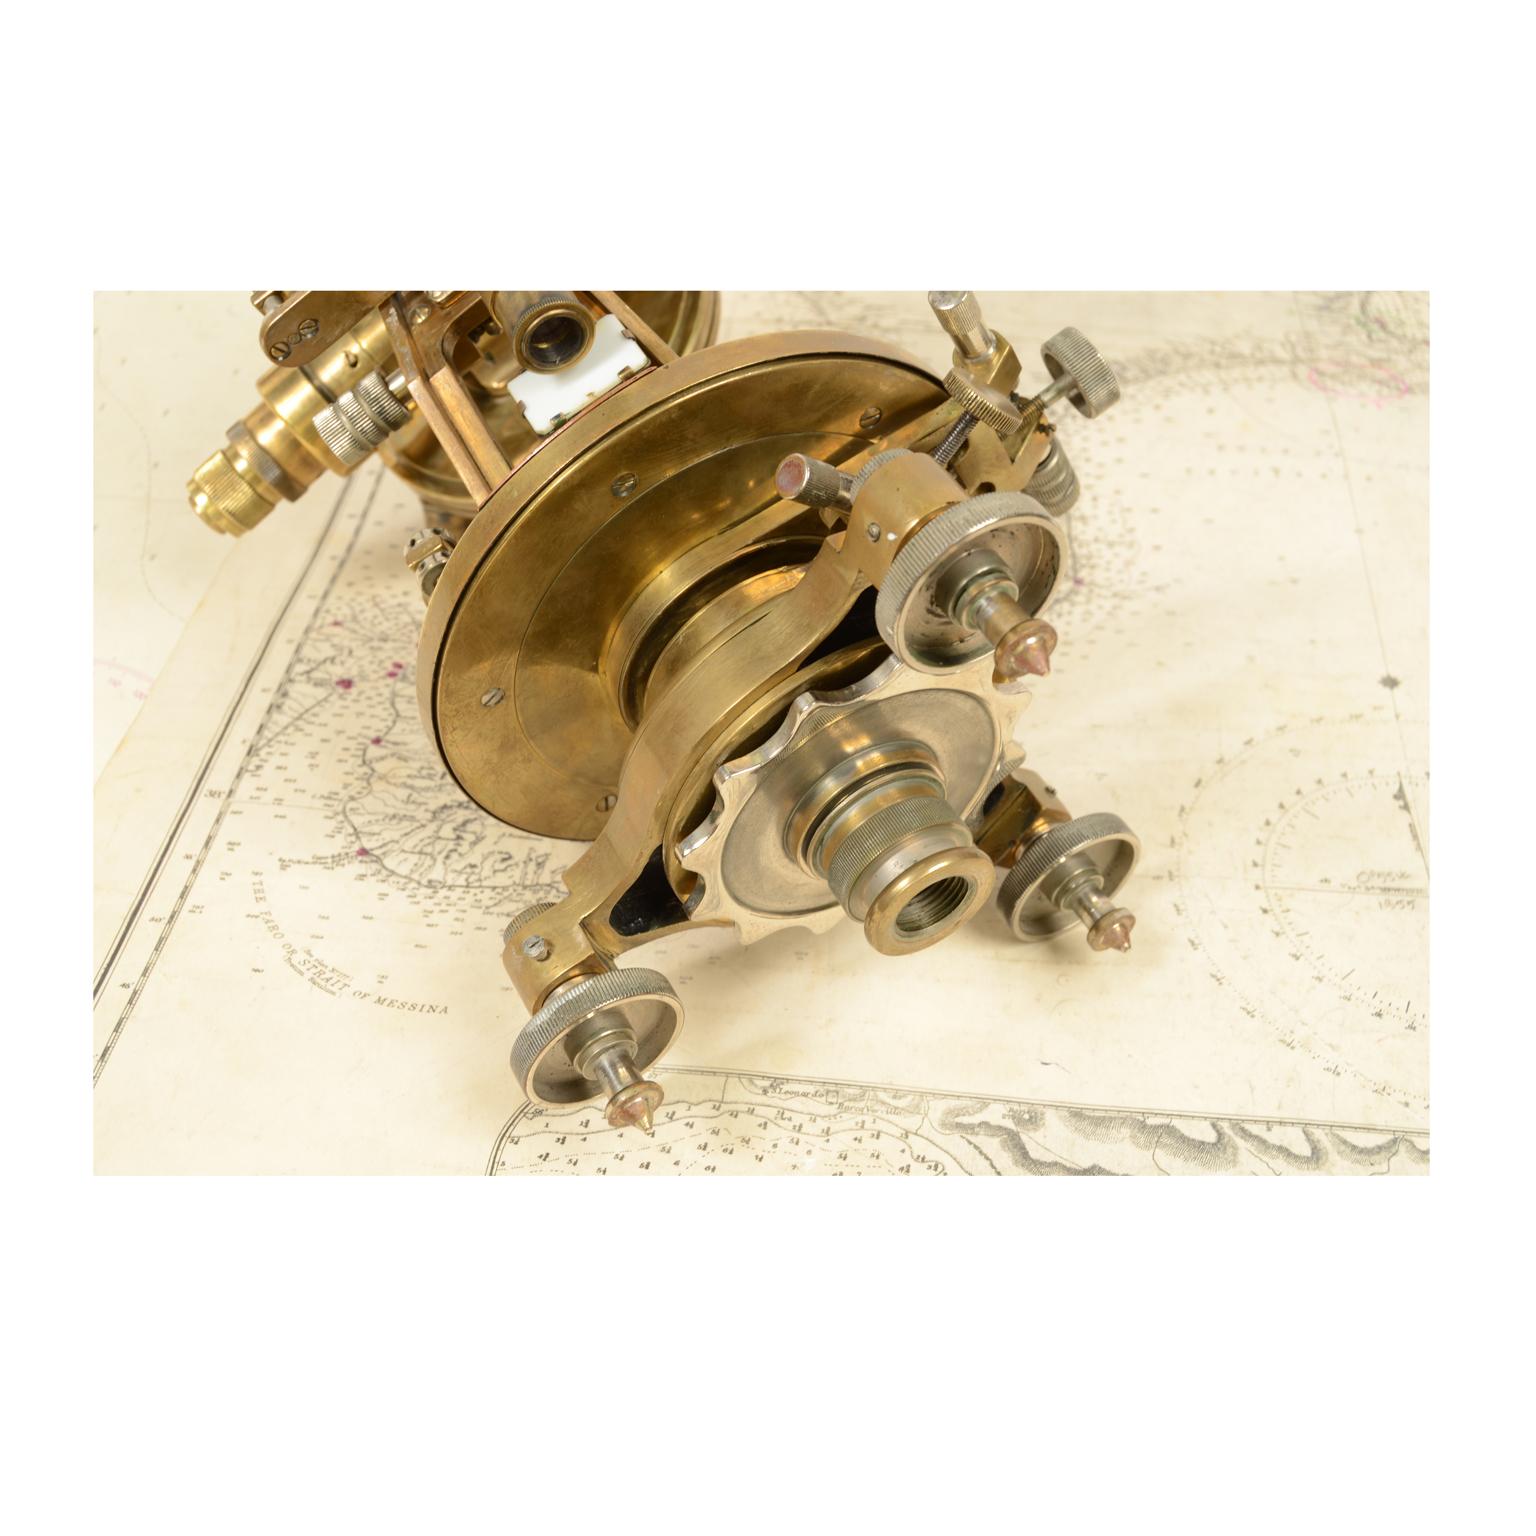 1900s English Antique Brass Tacheometer, surveying instrument 7